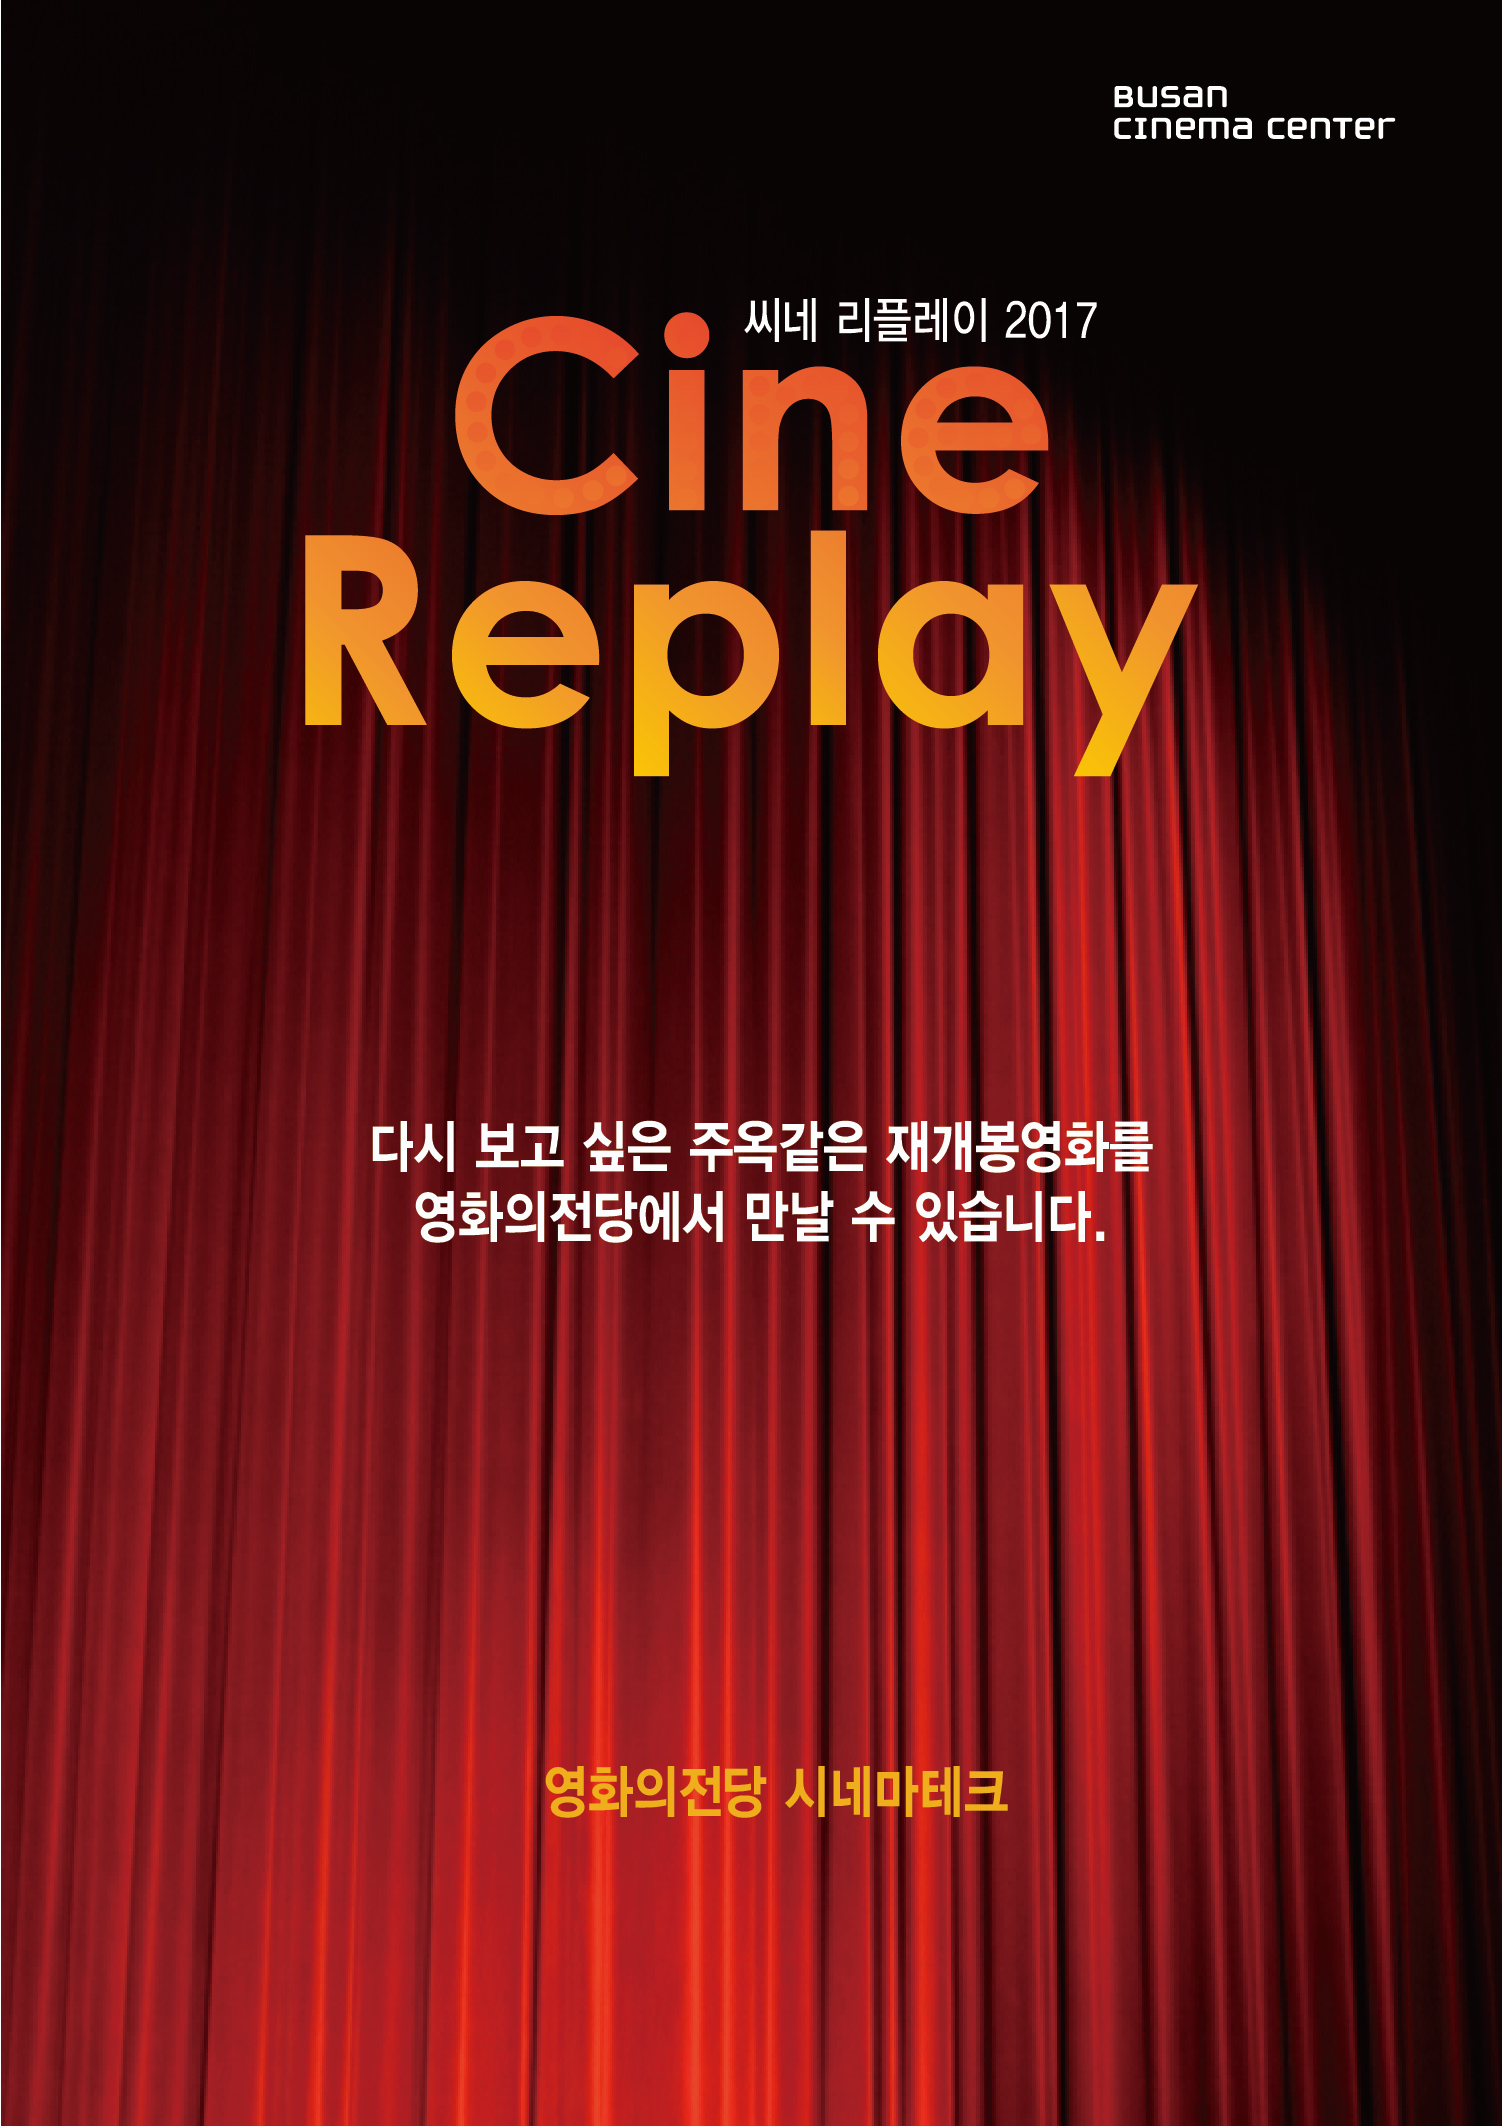 BUSAN CINEMA CENTER 씨네 리플레이 2017 Cine Replay 다시 보고 싶은 주옥같은 재개봉영화를 영화의전당에서 만날 수 있습니다. 영화의전당 시네마테크